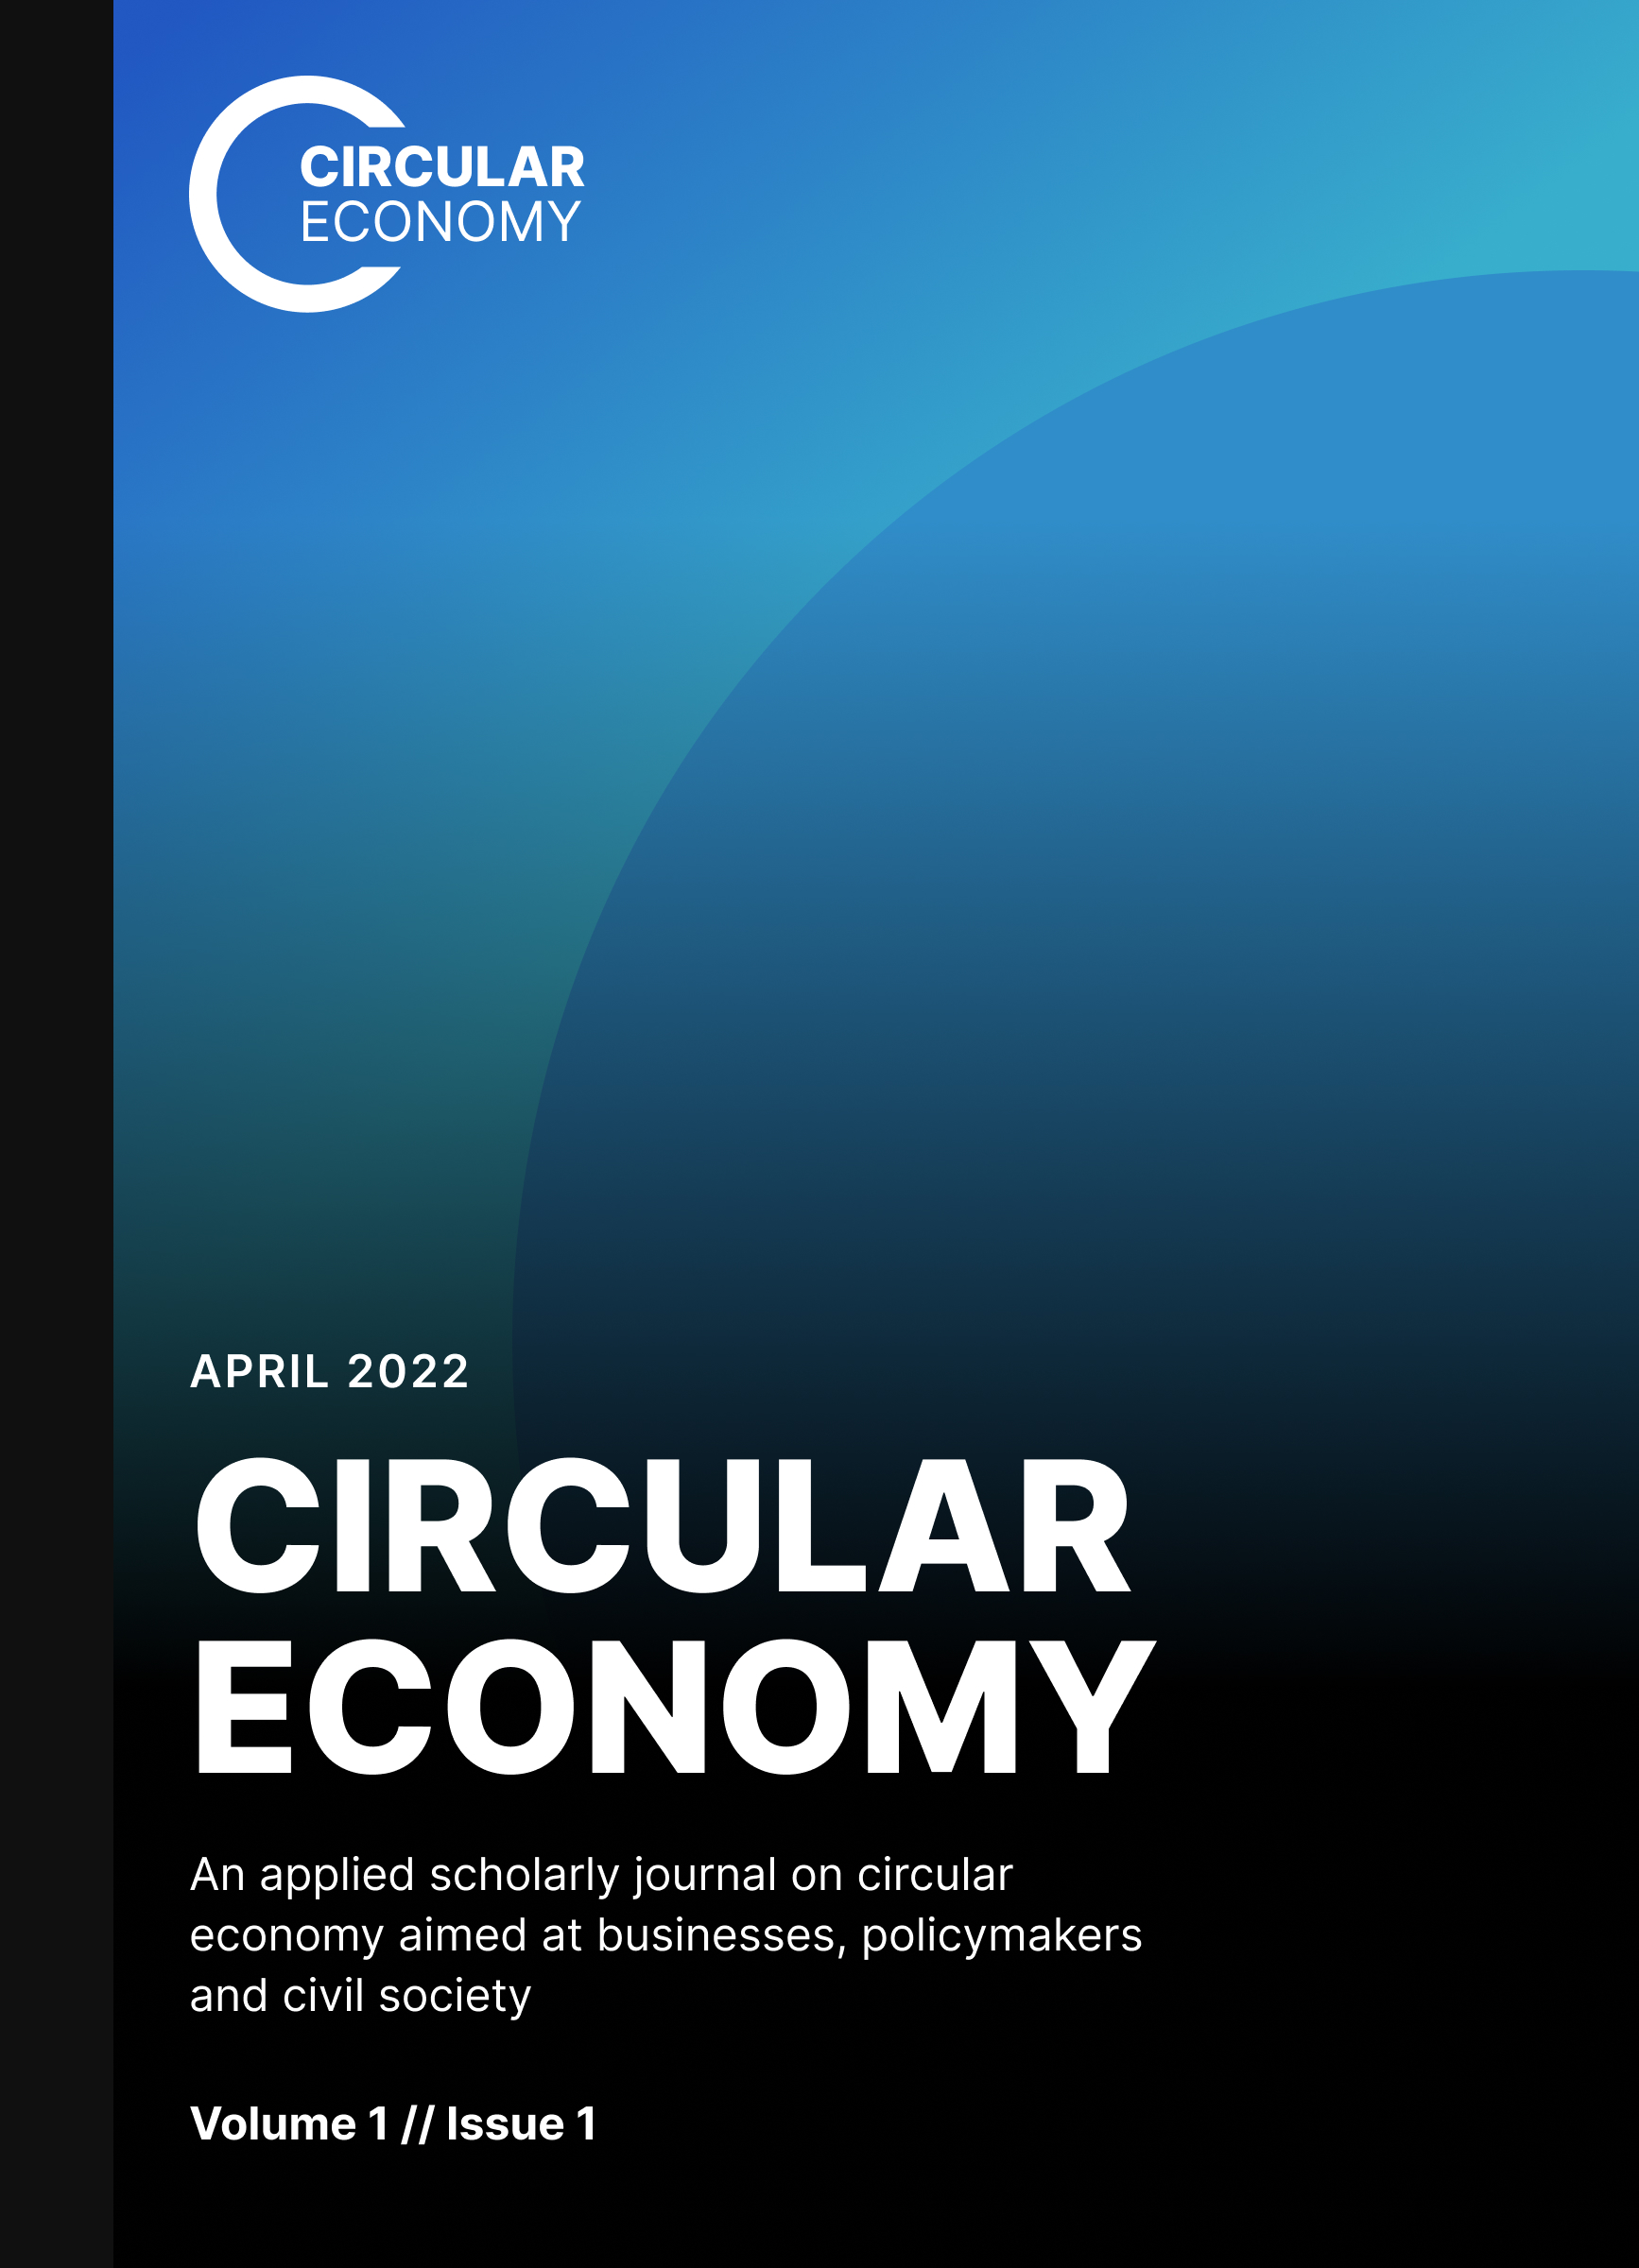 Nok Recommerce - Powering the Circular Economy